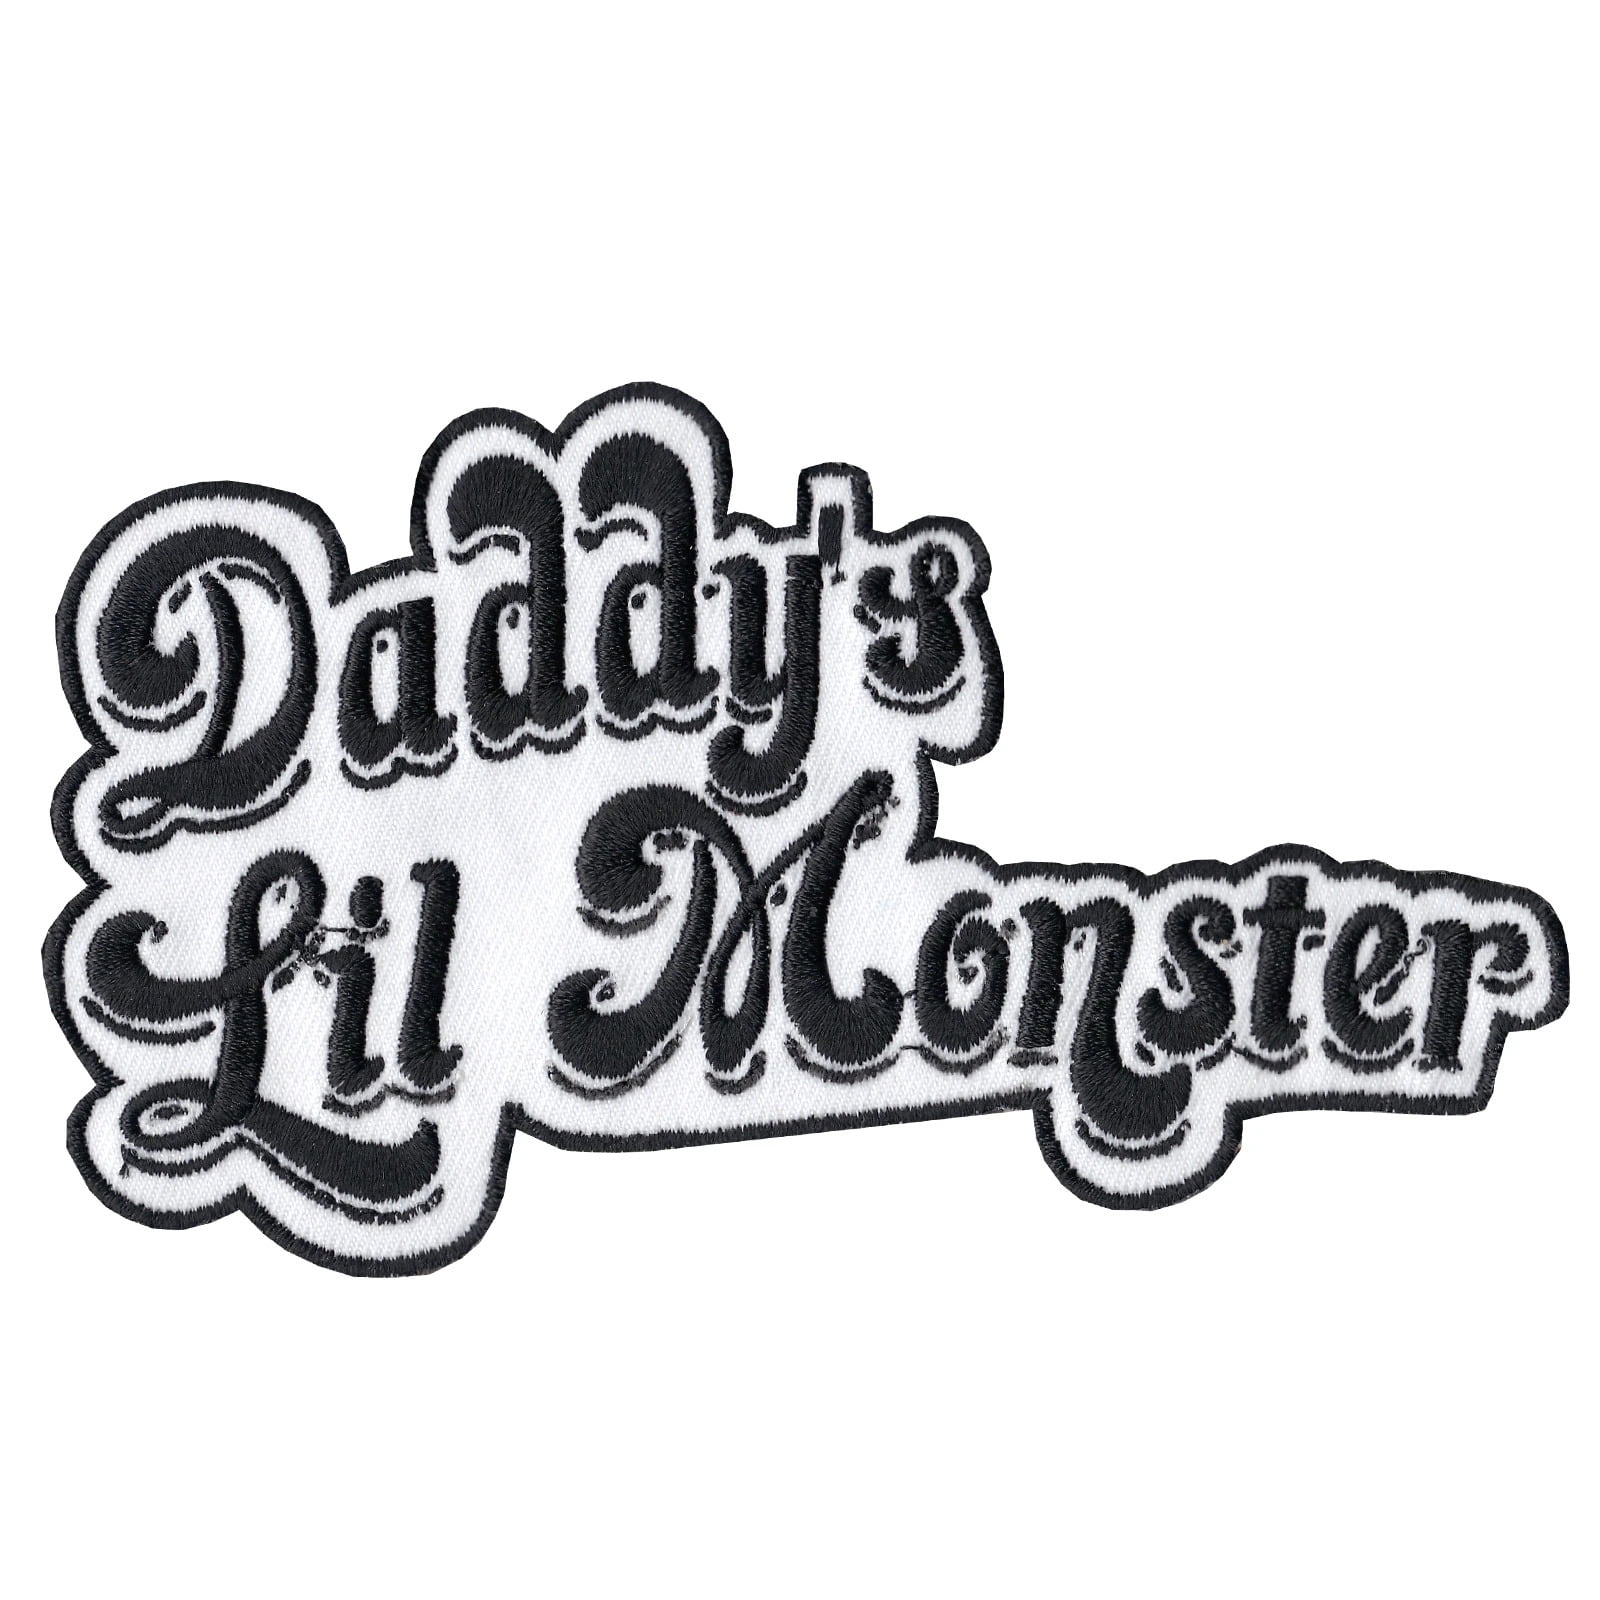 Monster daddys lil Daddy’s Lil